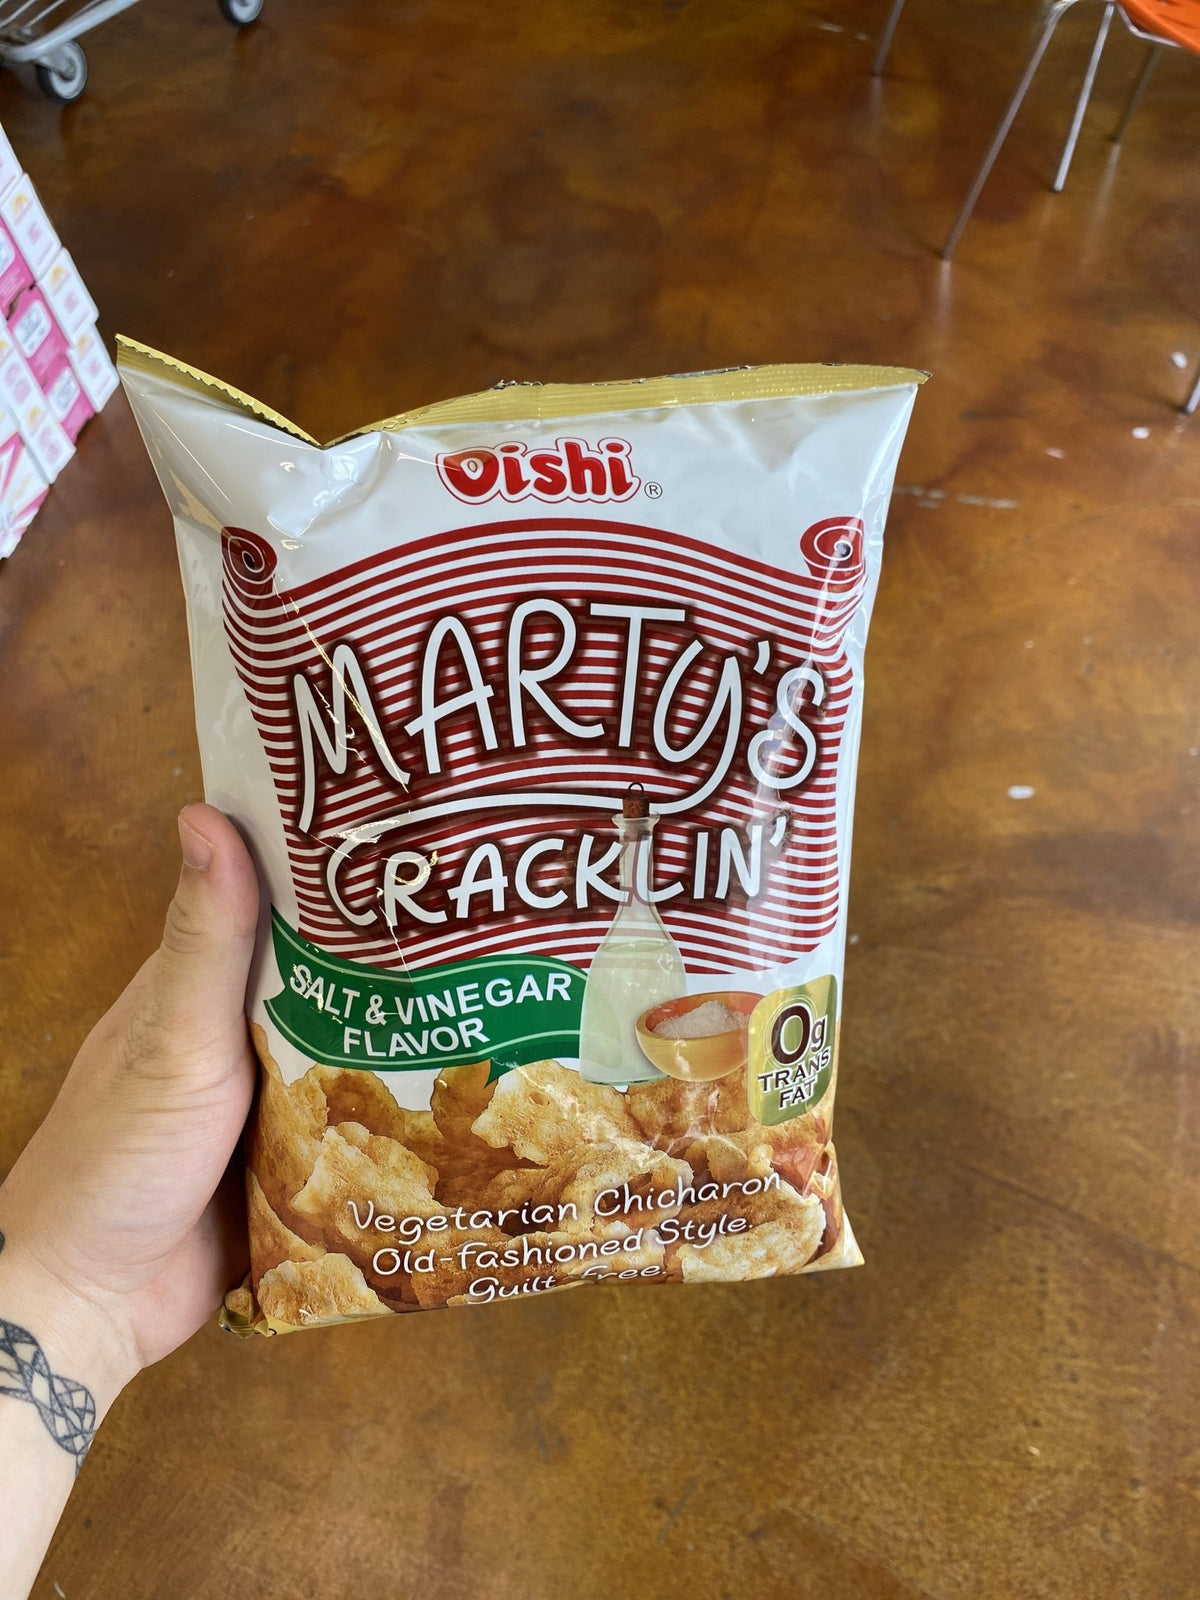 Marty’s Cracklin Salt and Vinegar Flavor Chicharon